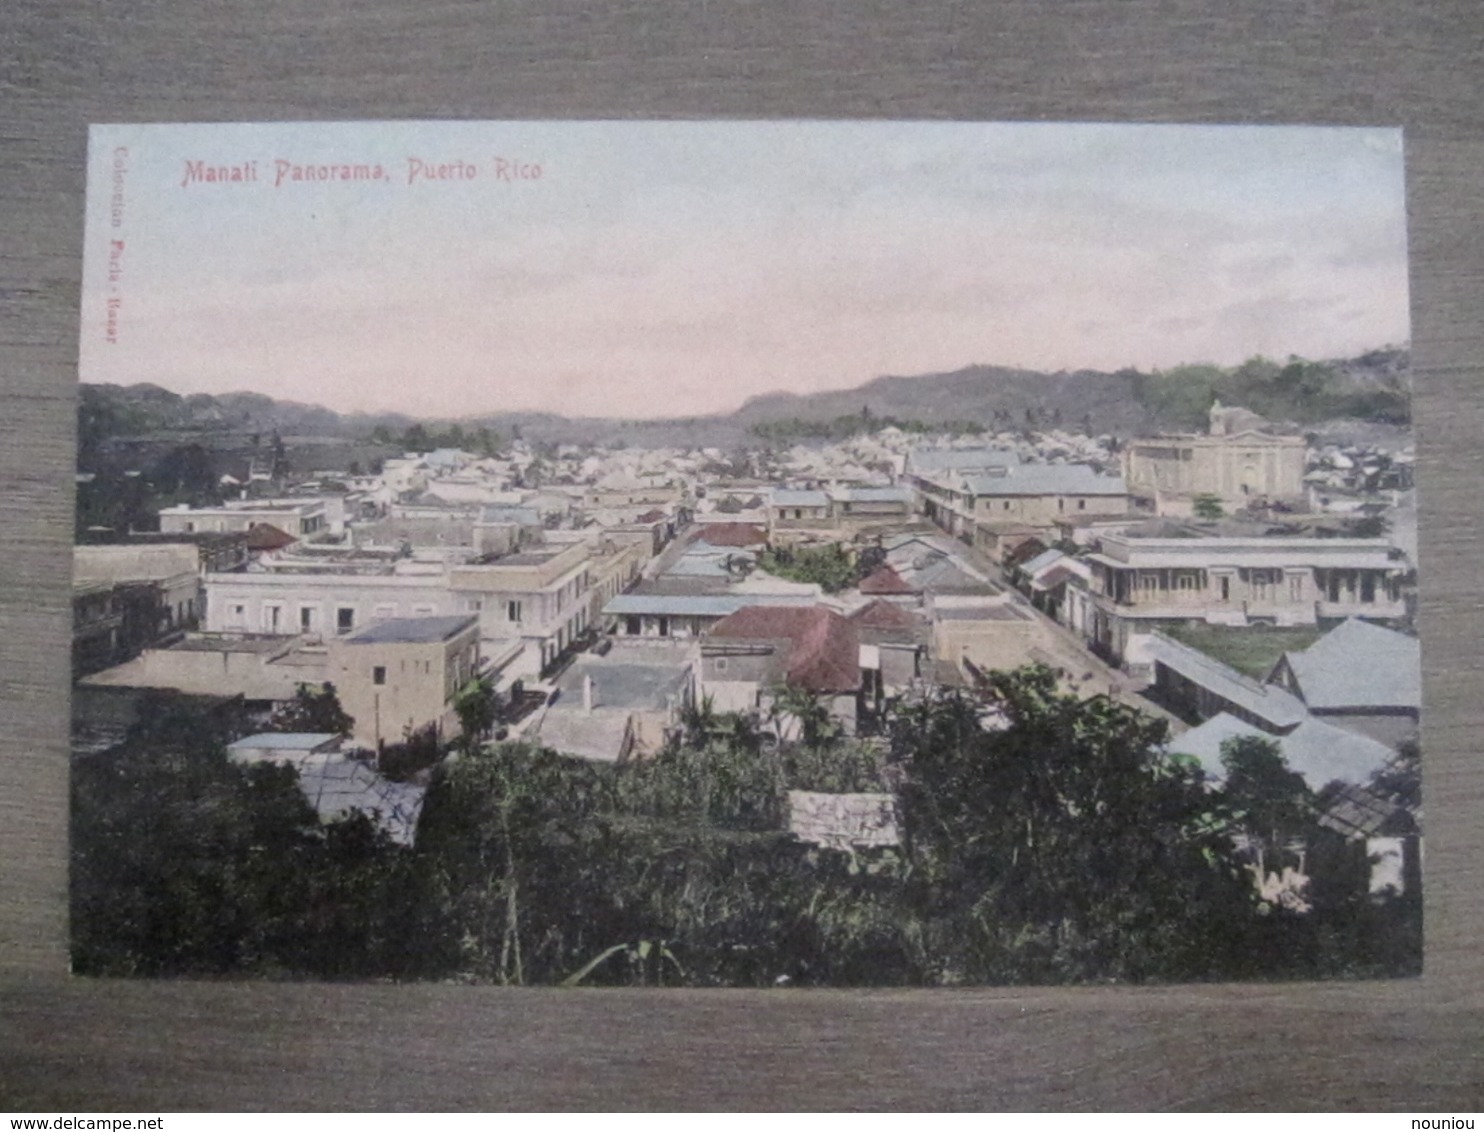 Tarjeta Postal - Postcard - Manati Panorama - Porto Puerto Rico - Antilles - Puerto Rico